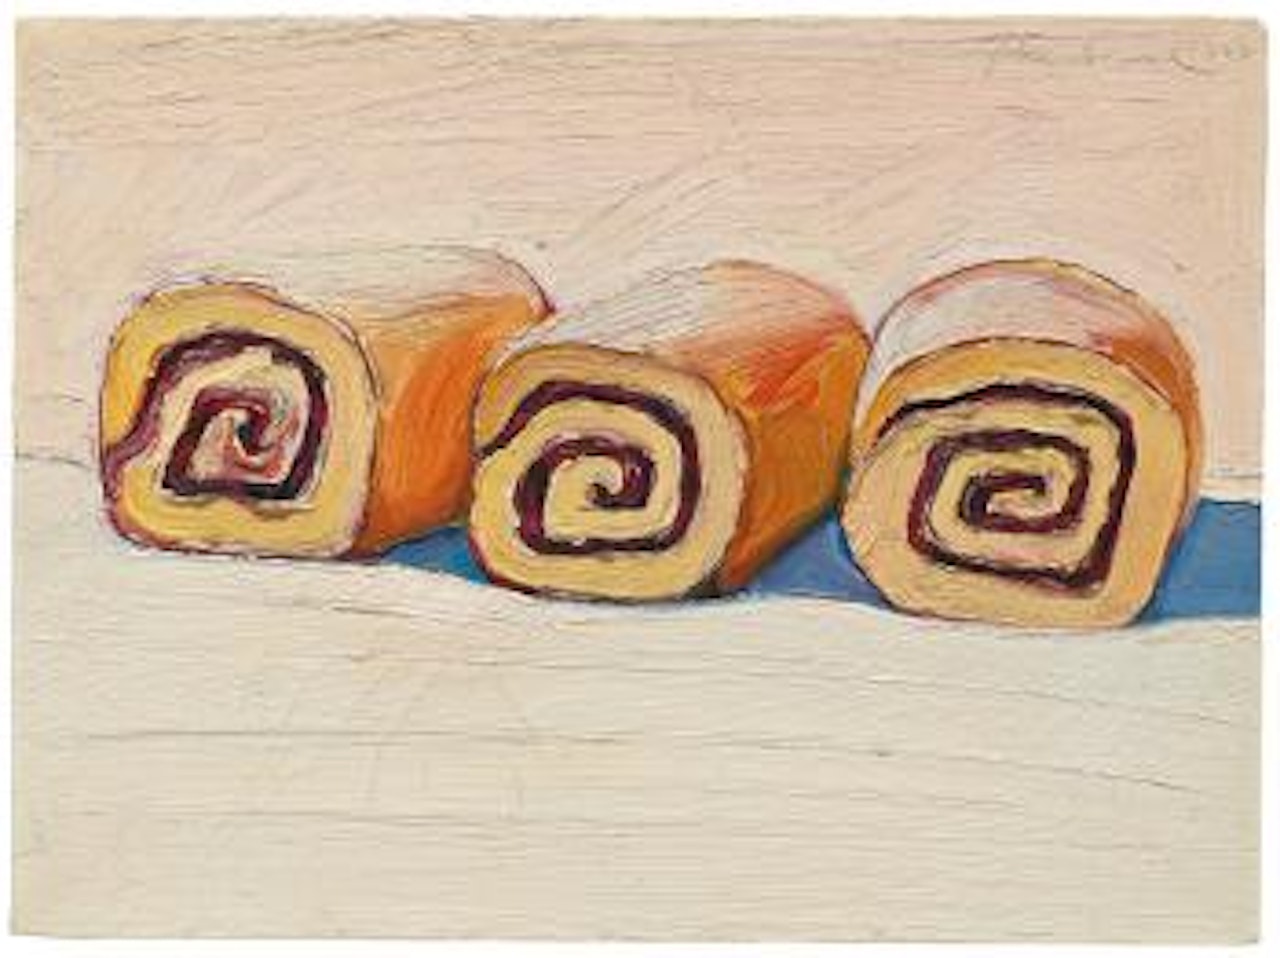 Three jelly rolls by Wayne Thiebaud